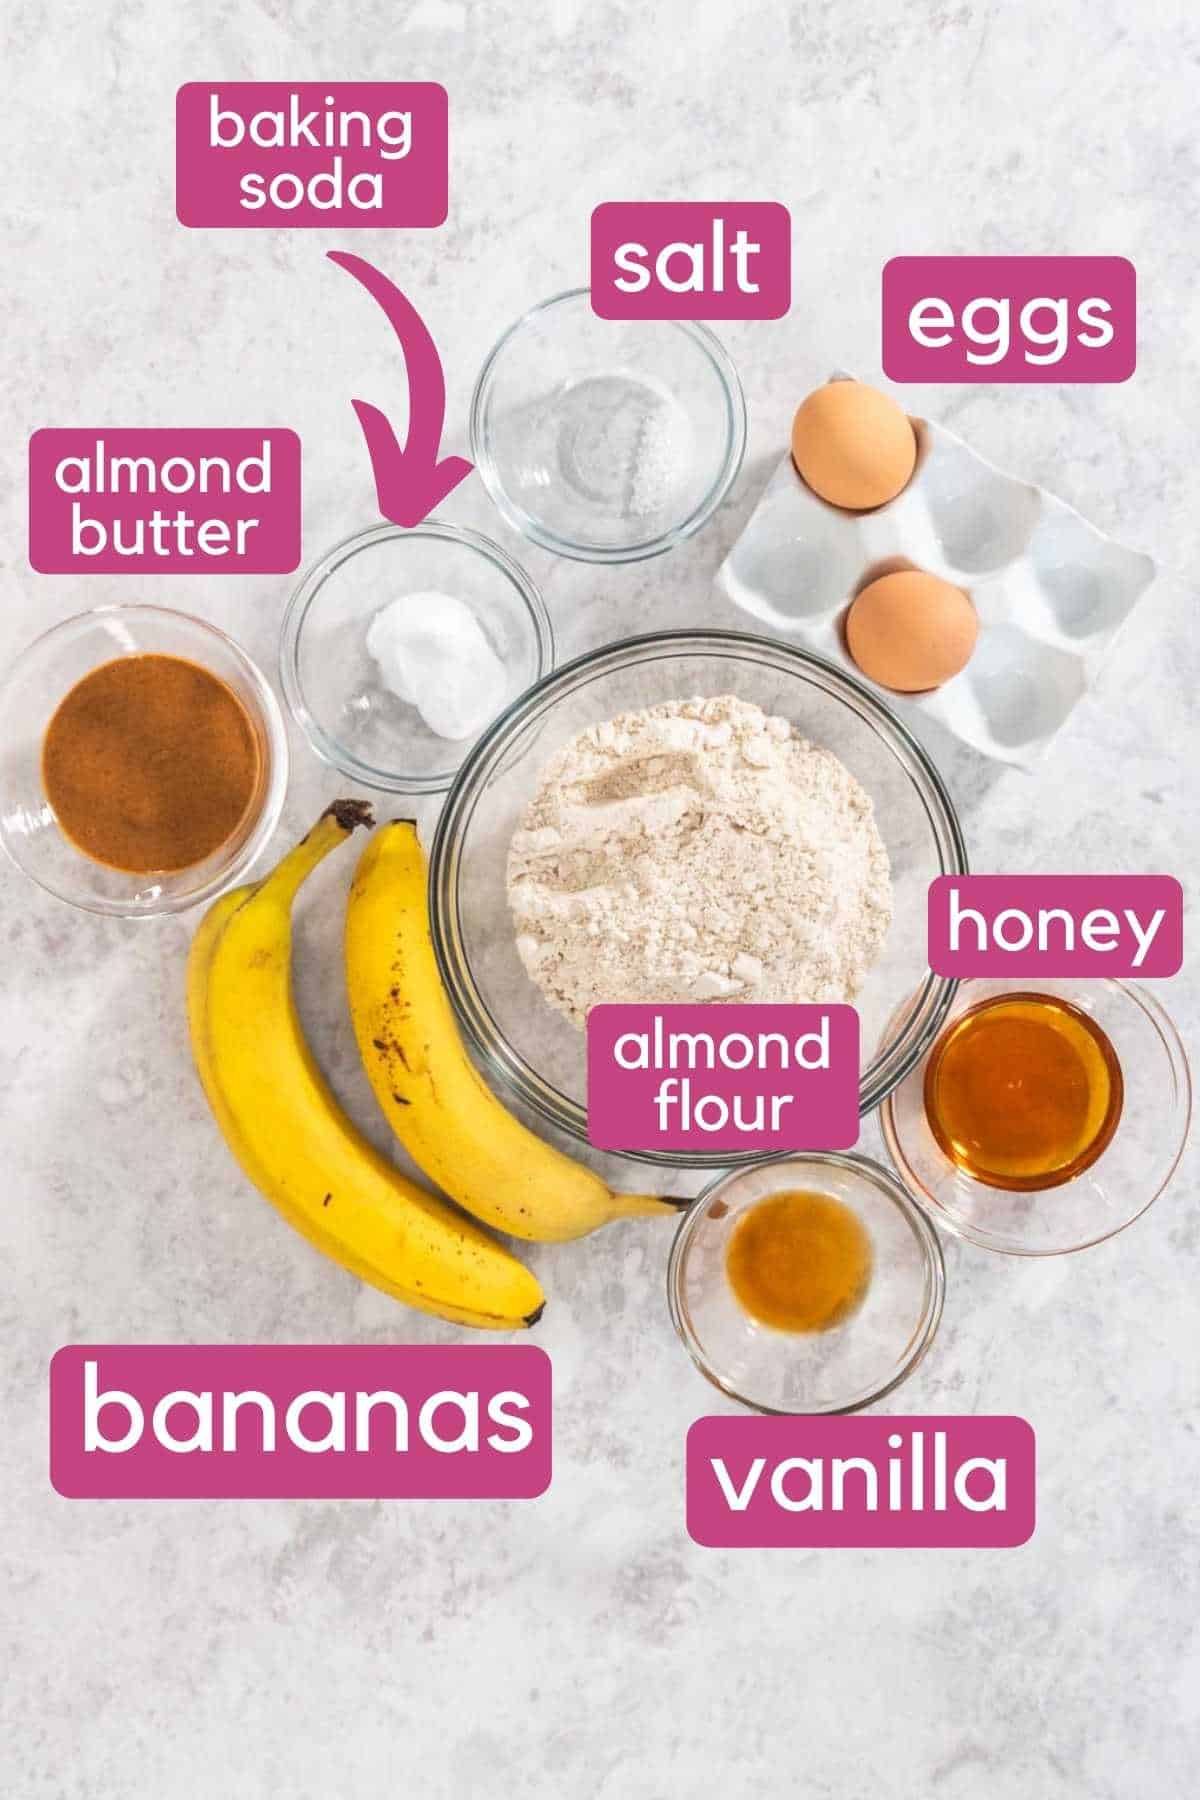 Almond Flour Banana Muffin ingredients.